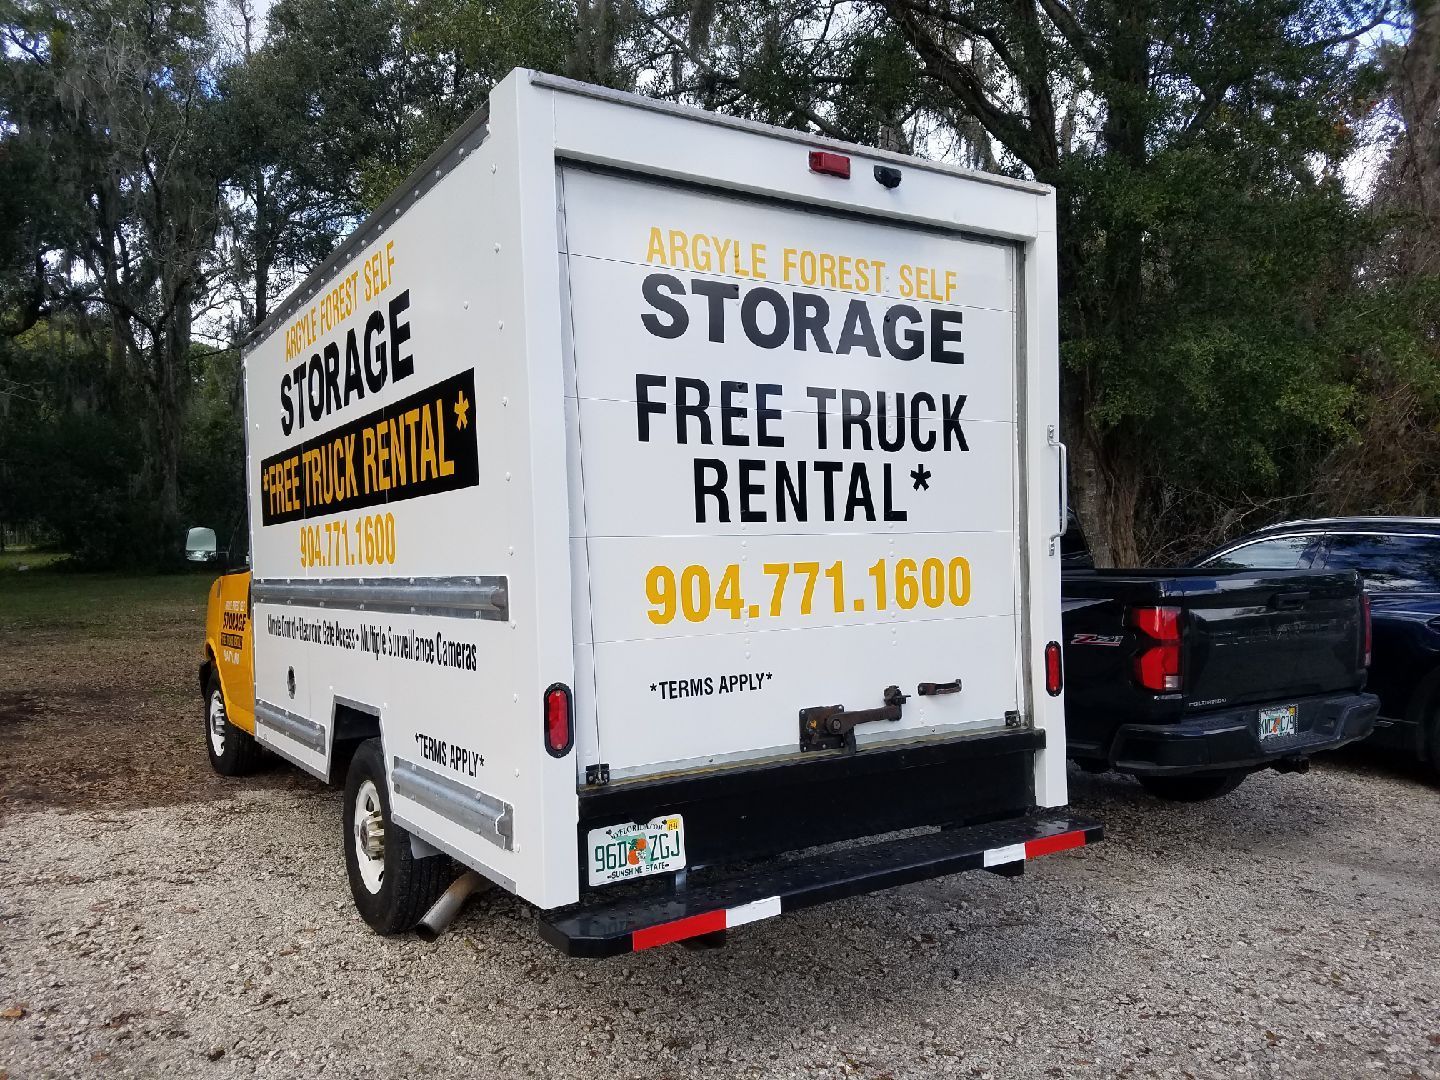 White Storage Truck Parked In A Lot - Jacksonville, FL - Argyle Forest Self Storage